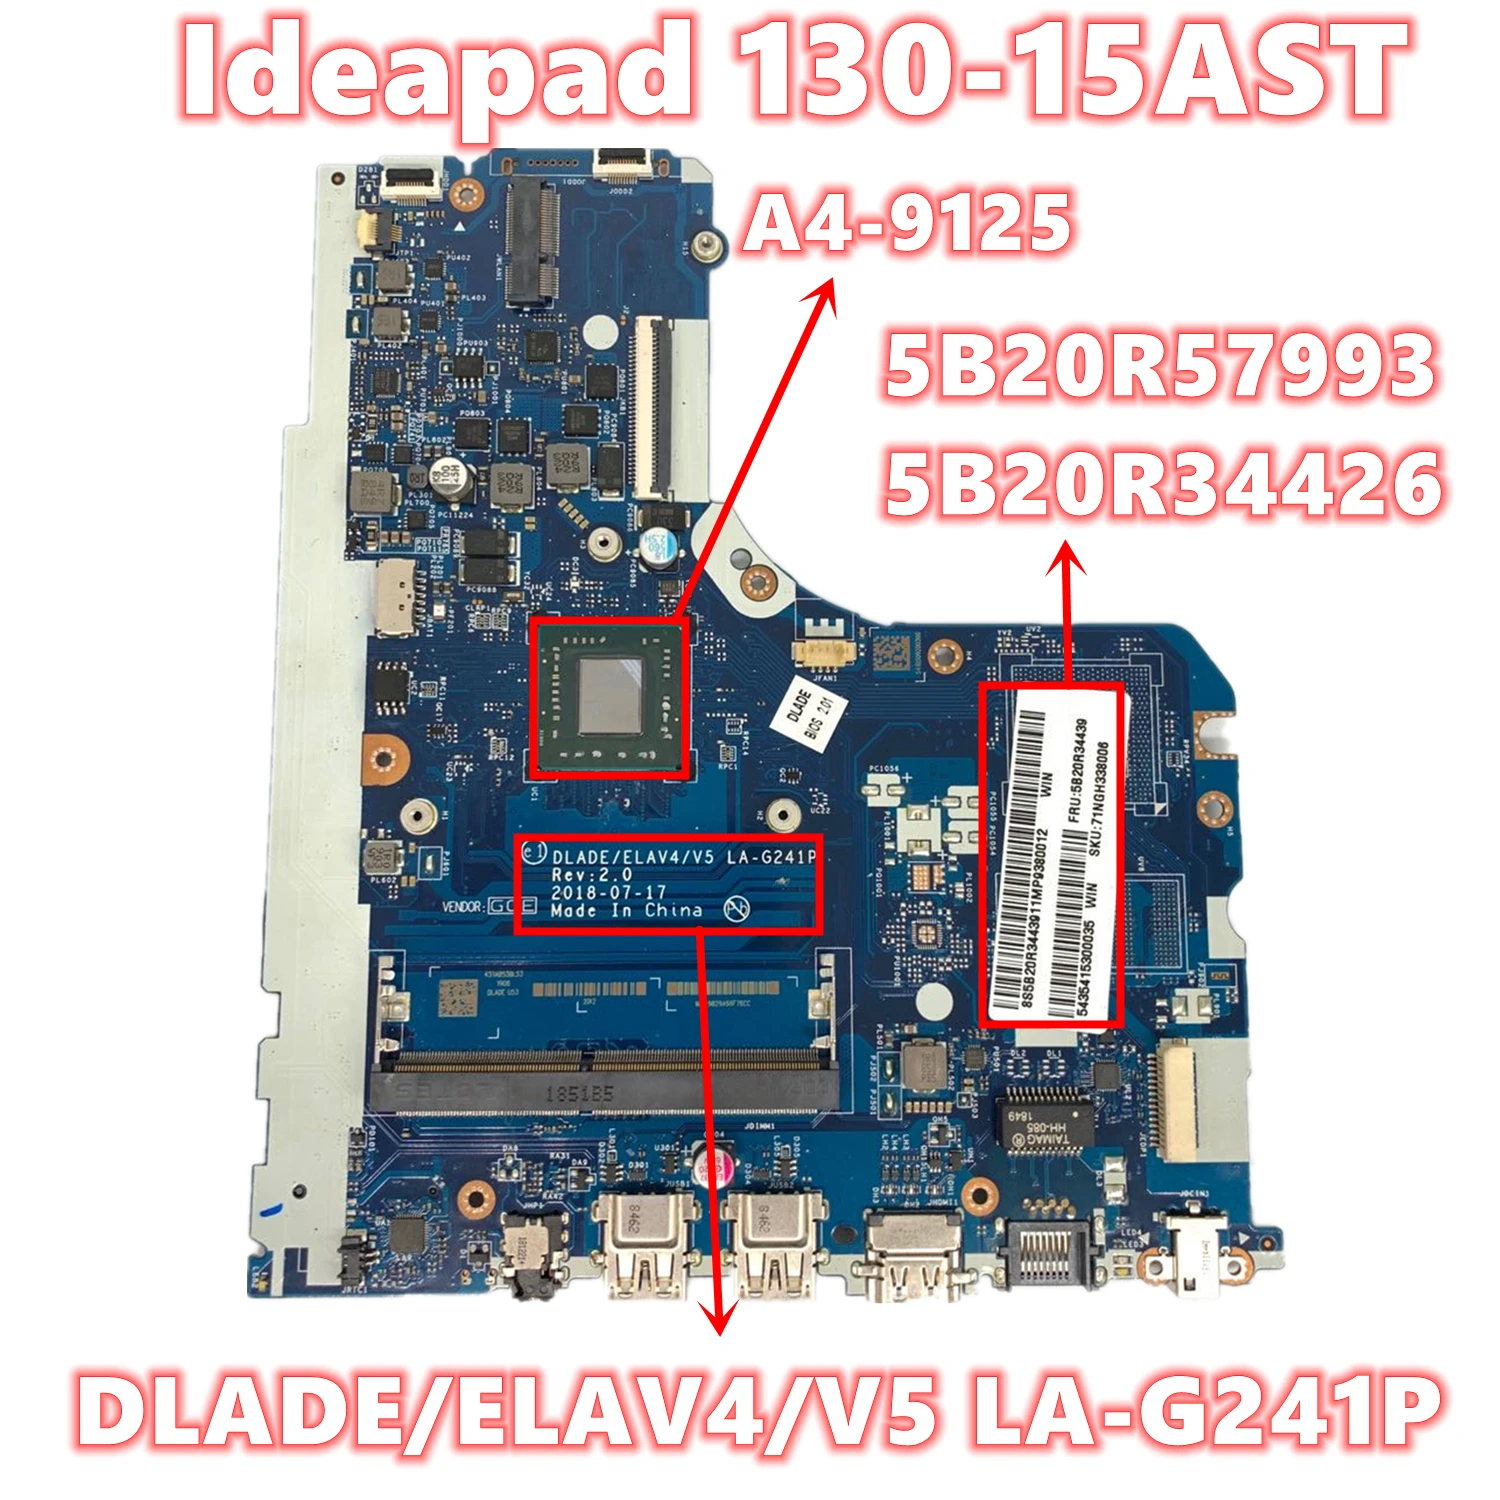 

5B20R57993 5B20R34426 For Lenovo Ideapad 130-15AST Laptop Motherboard DLADE/ELAV4/V5 LA-G241P With A4-9125 DDR4 Fully Tested OK